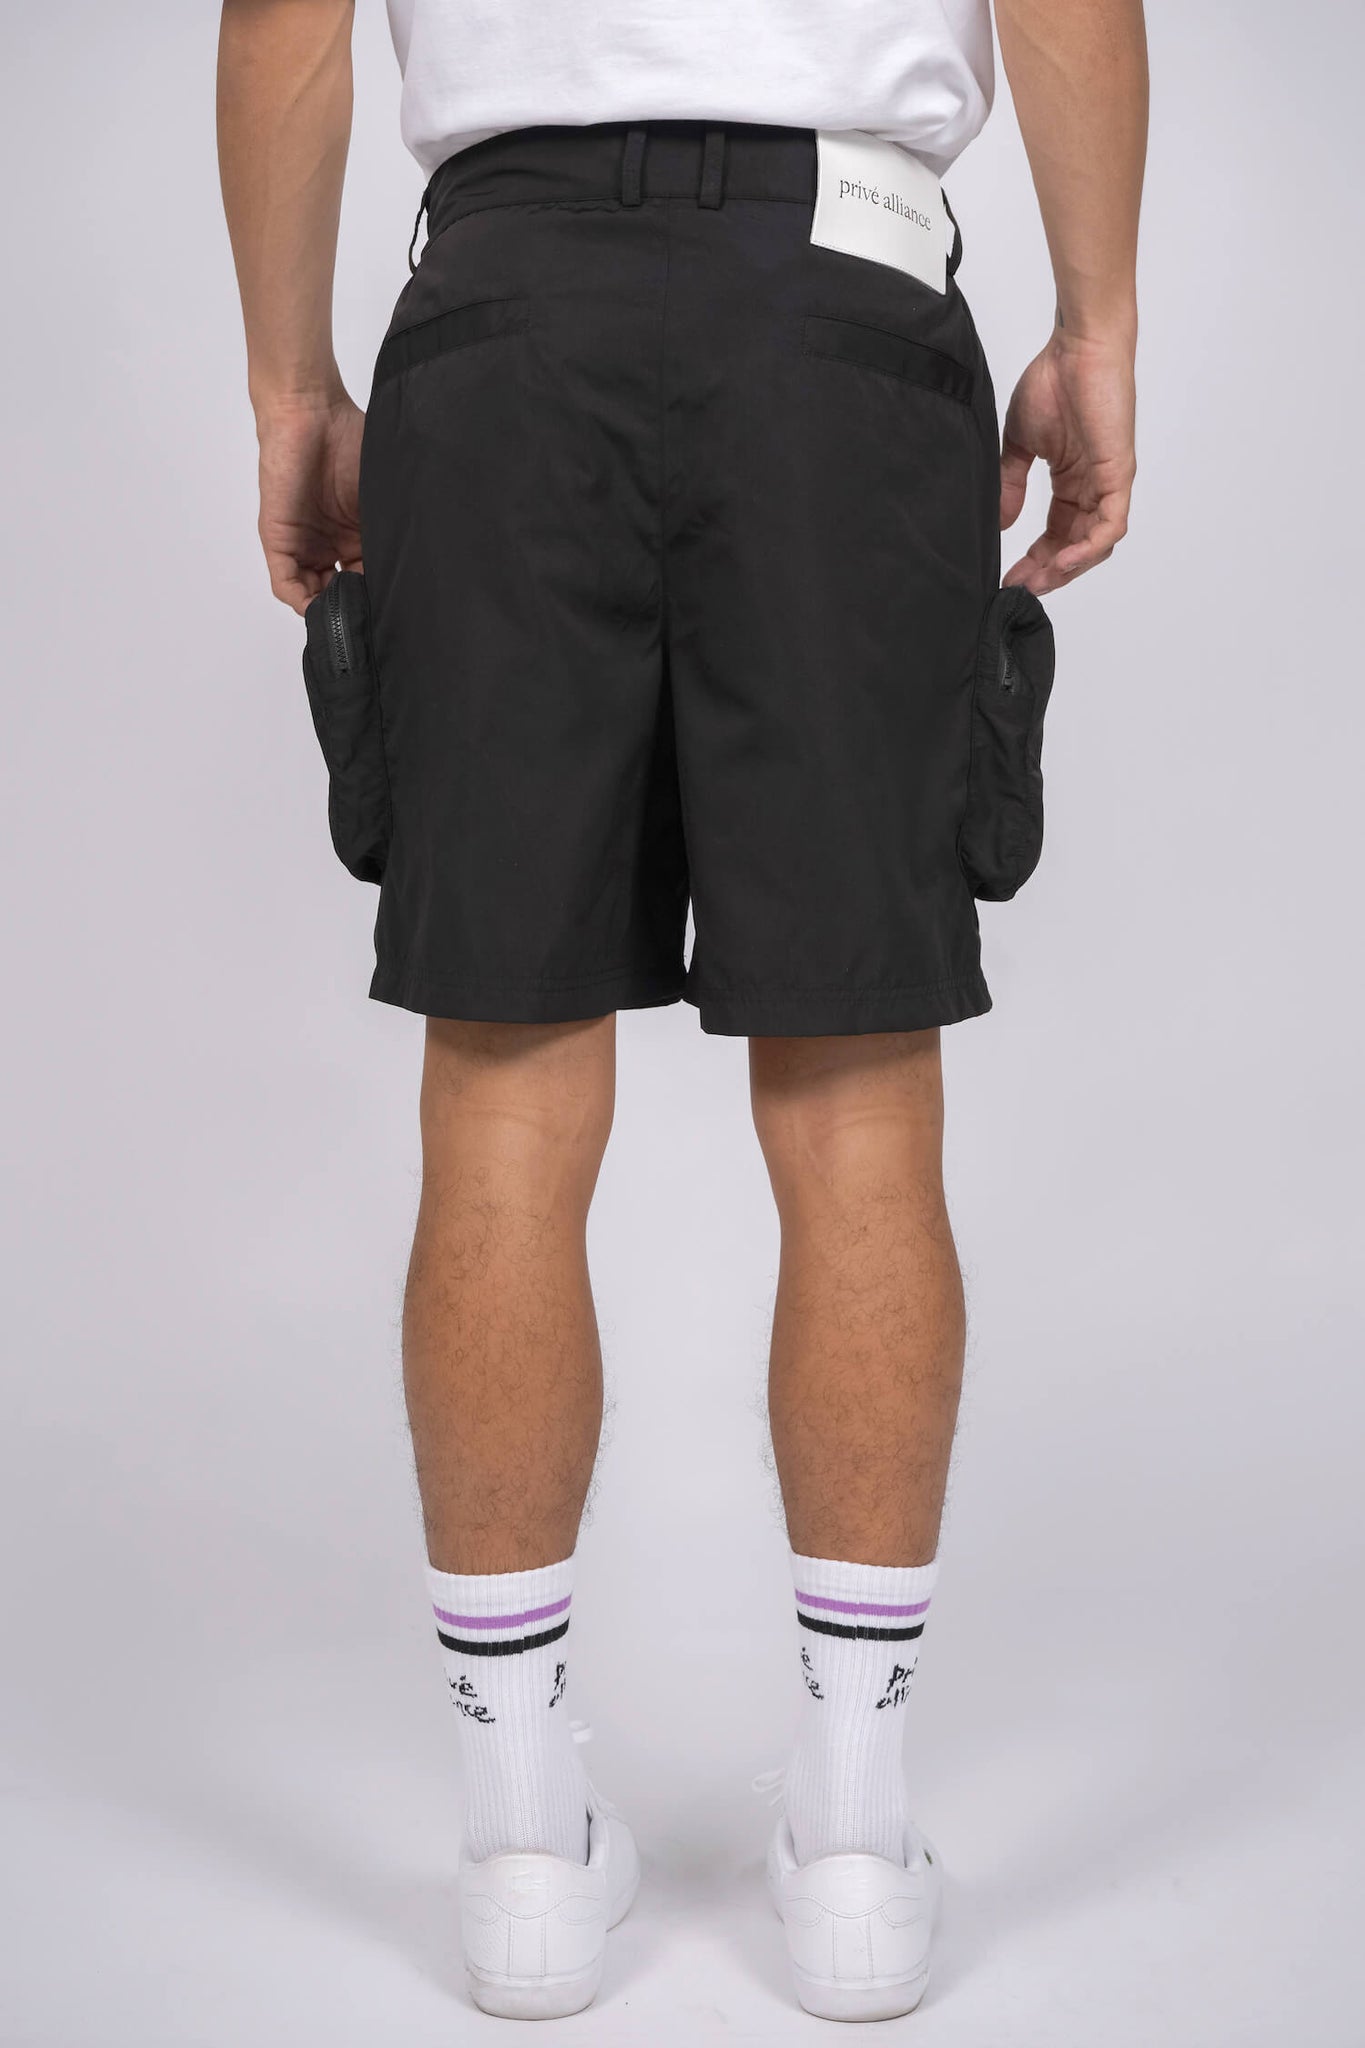 Prive Alliance Men's Off-duty shorts